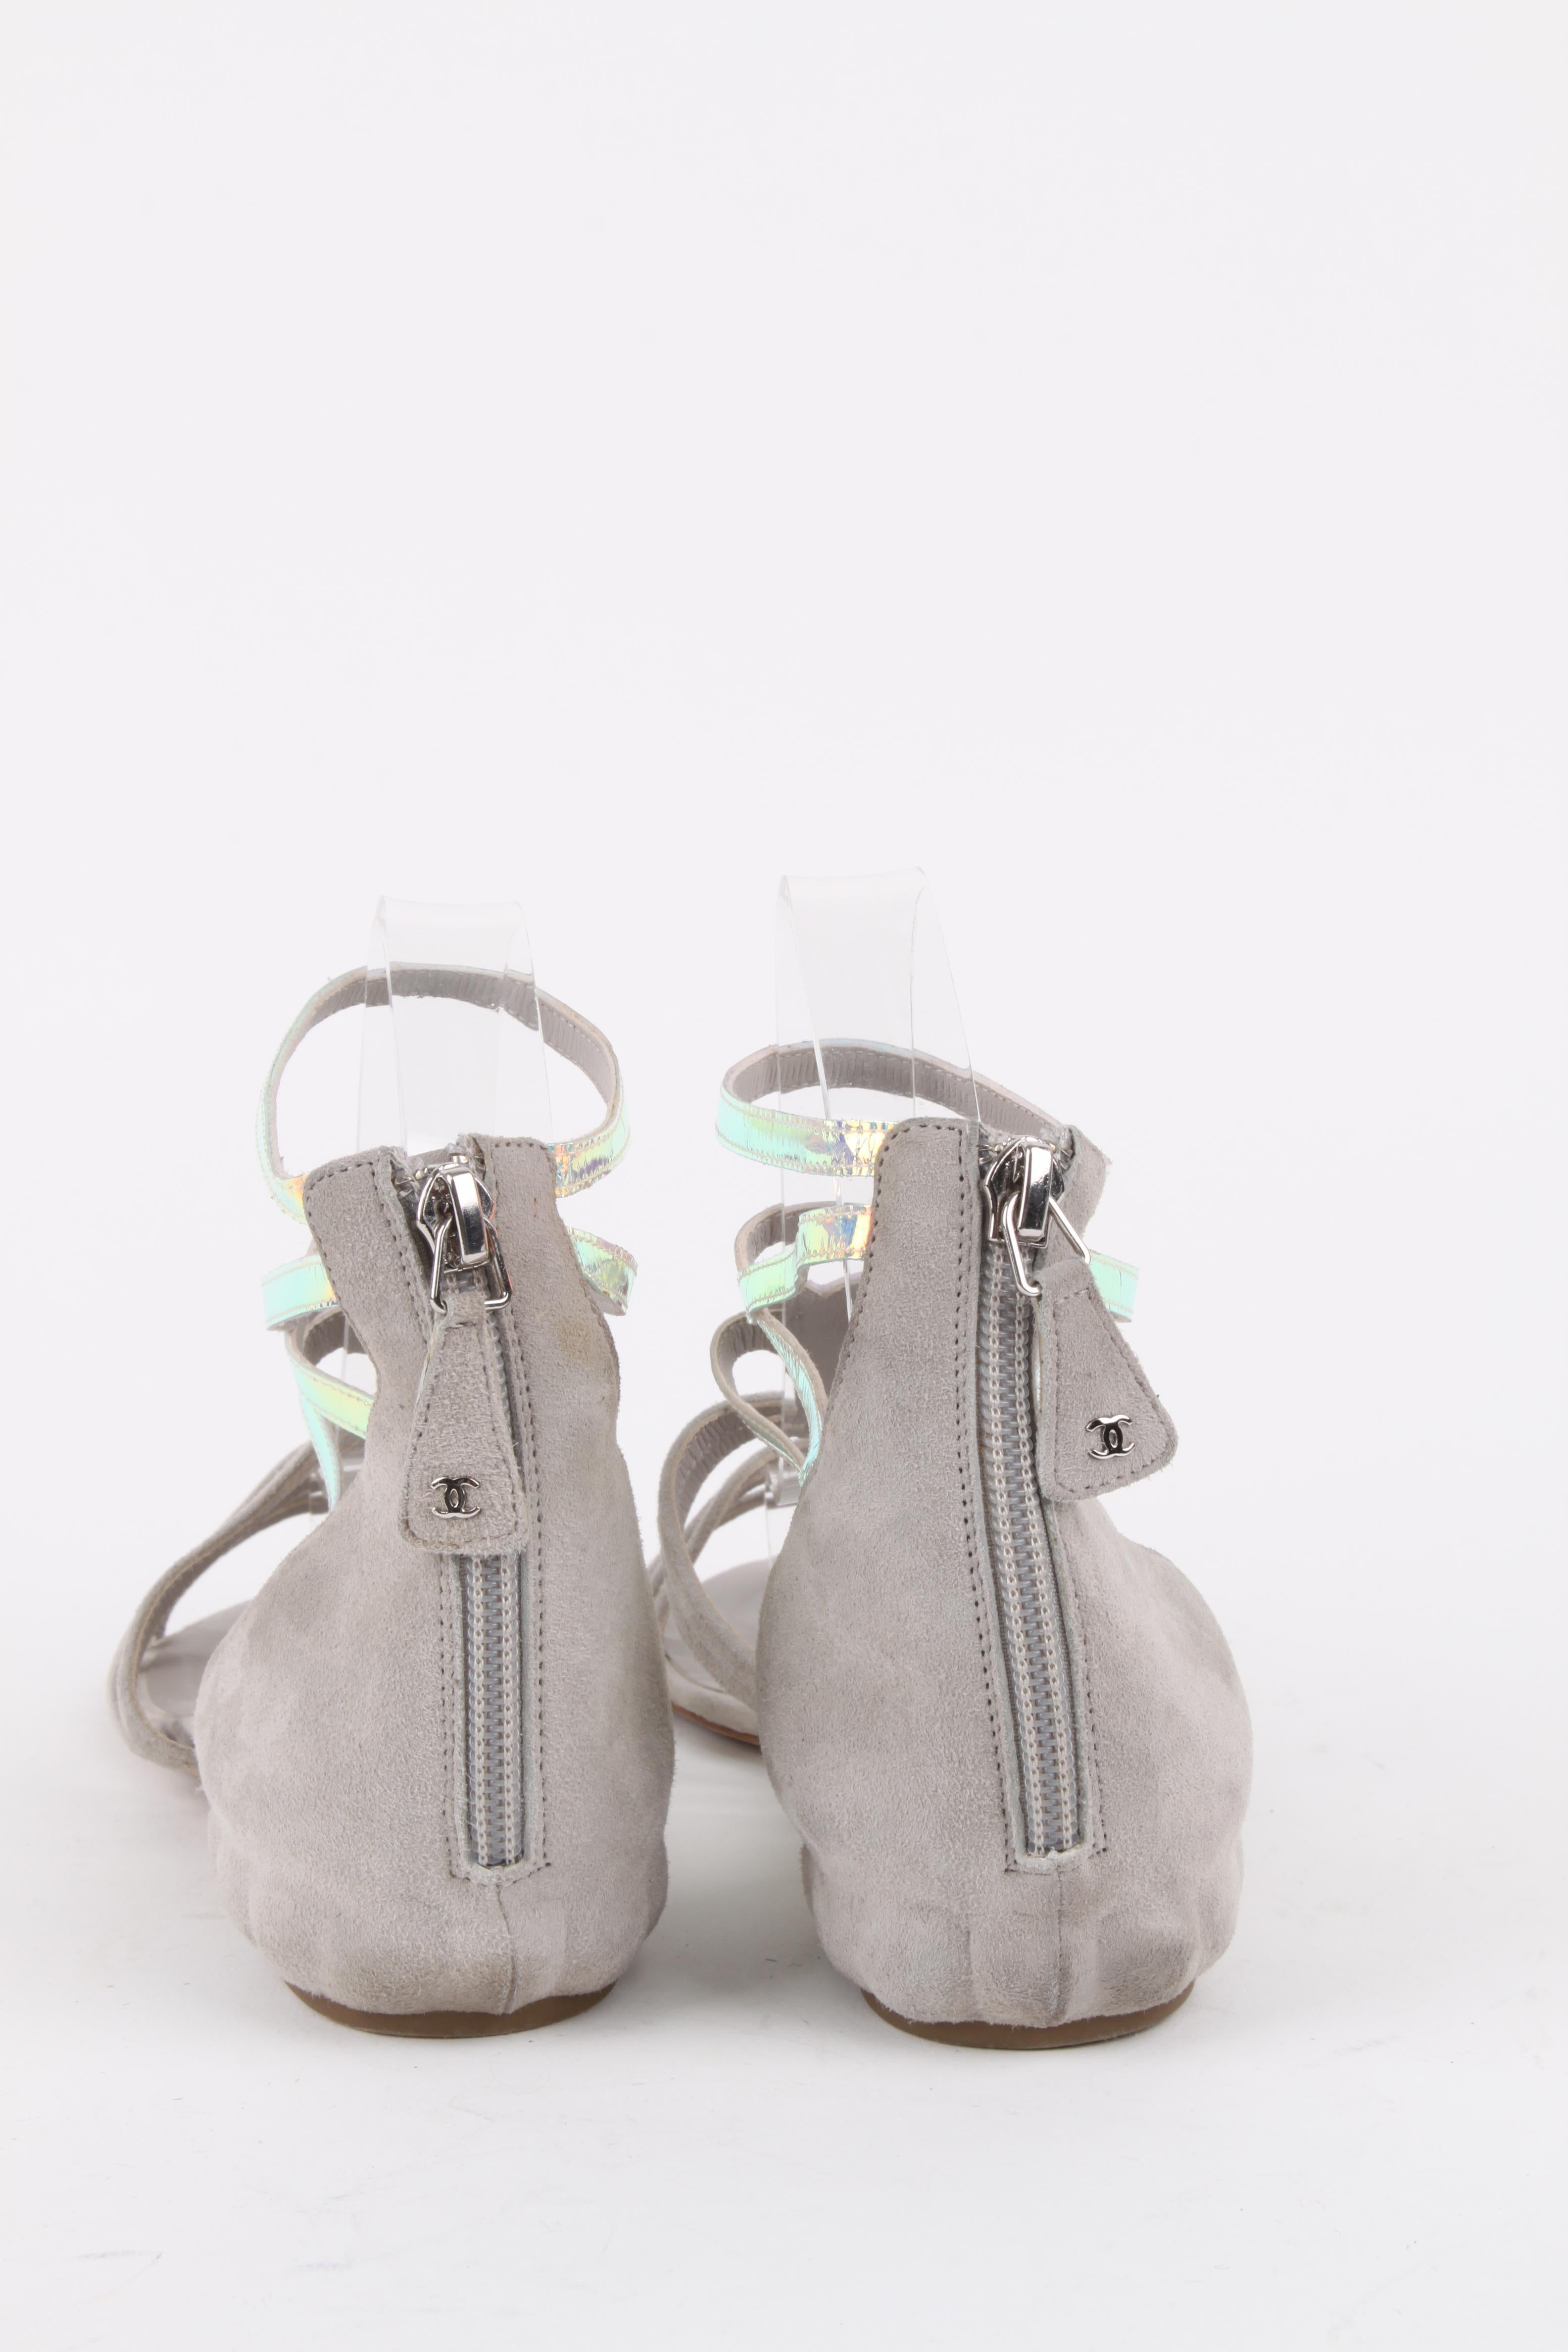 chanel iridescent sandals